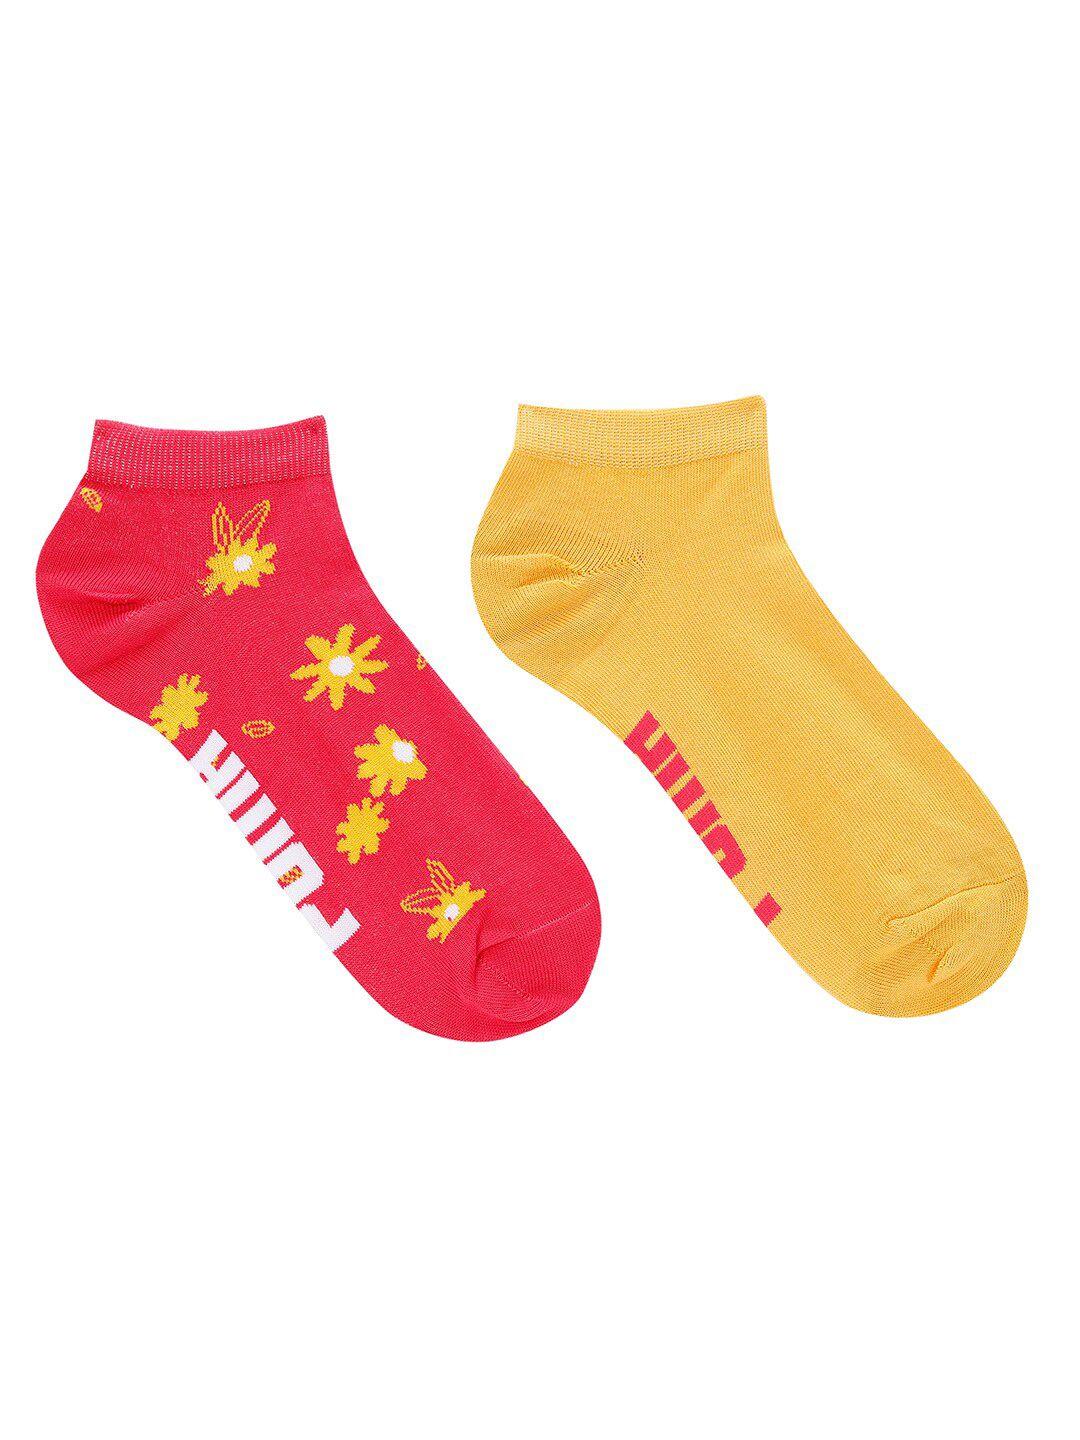 puma unisex sneaker socks pack of 1